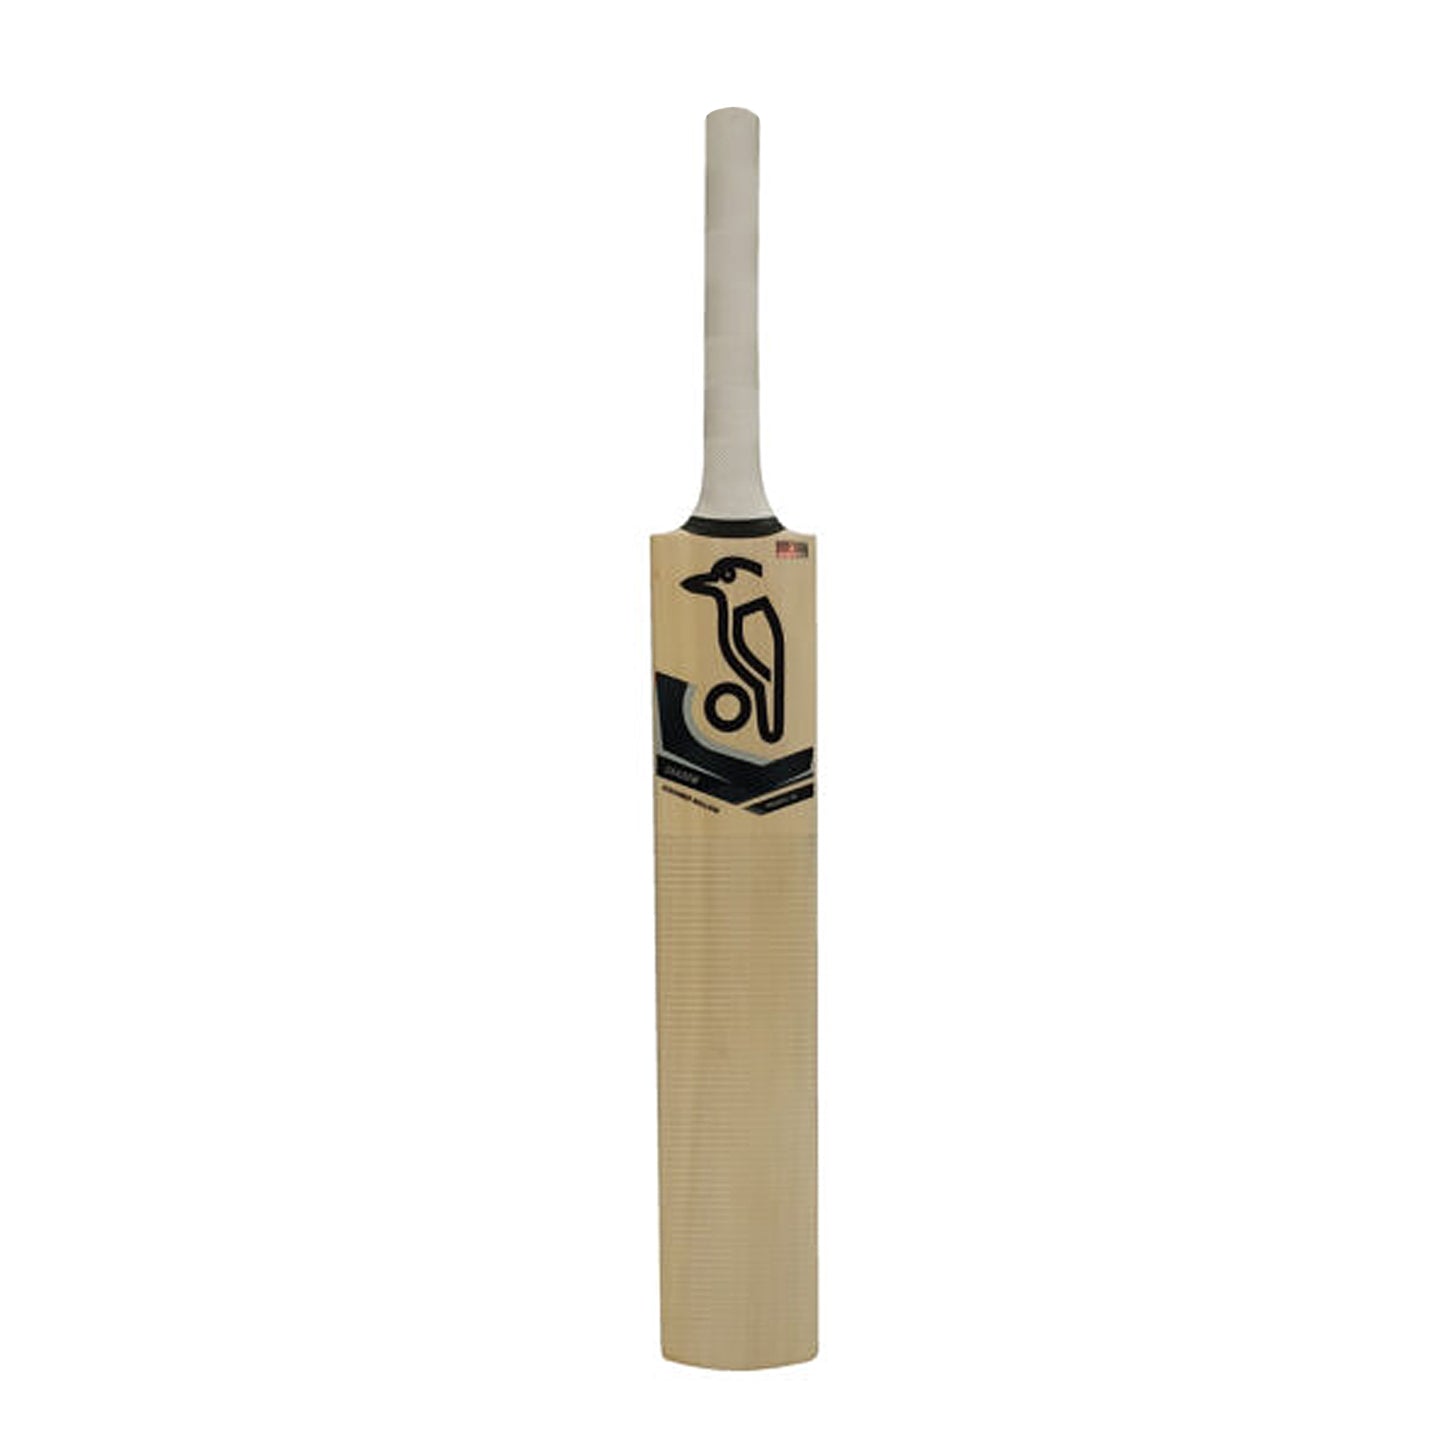 Kookaburra Shadow Prodigy 30 Kashmir Willow Cricket Bat - Best Price online Prokicksports.com